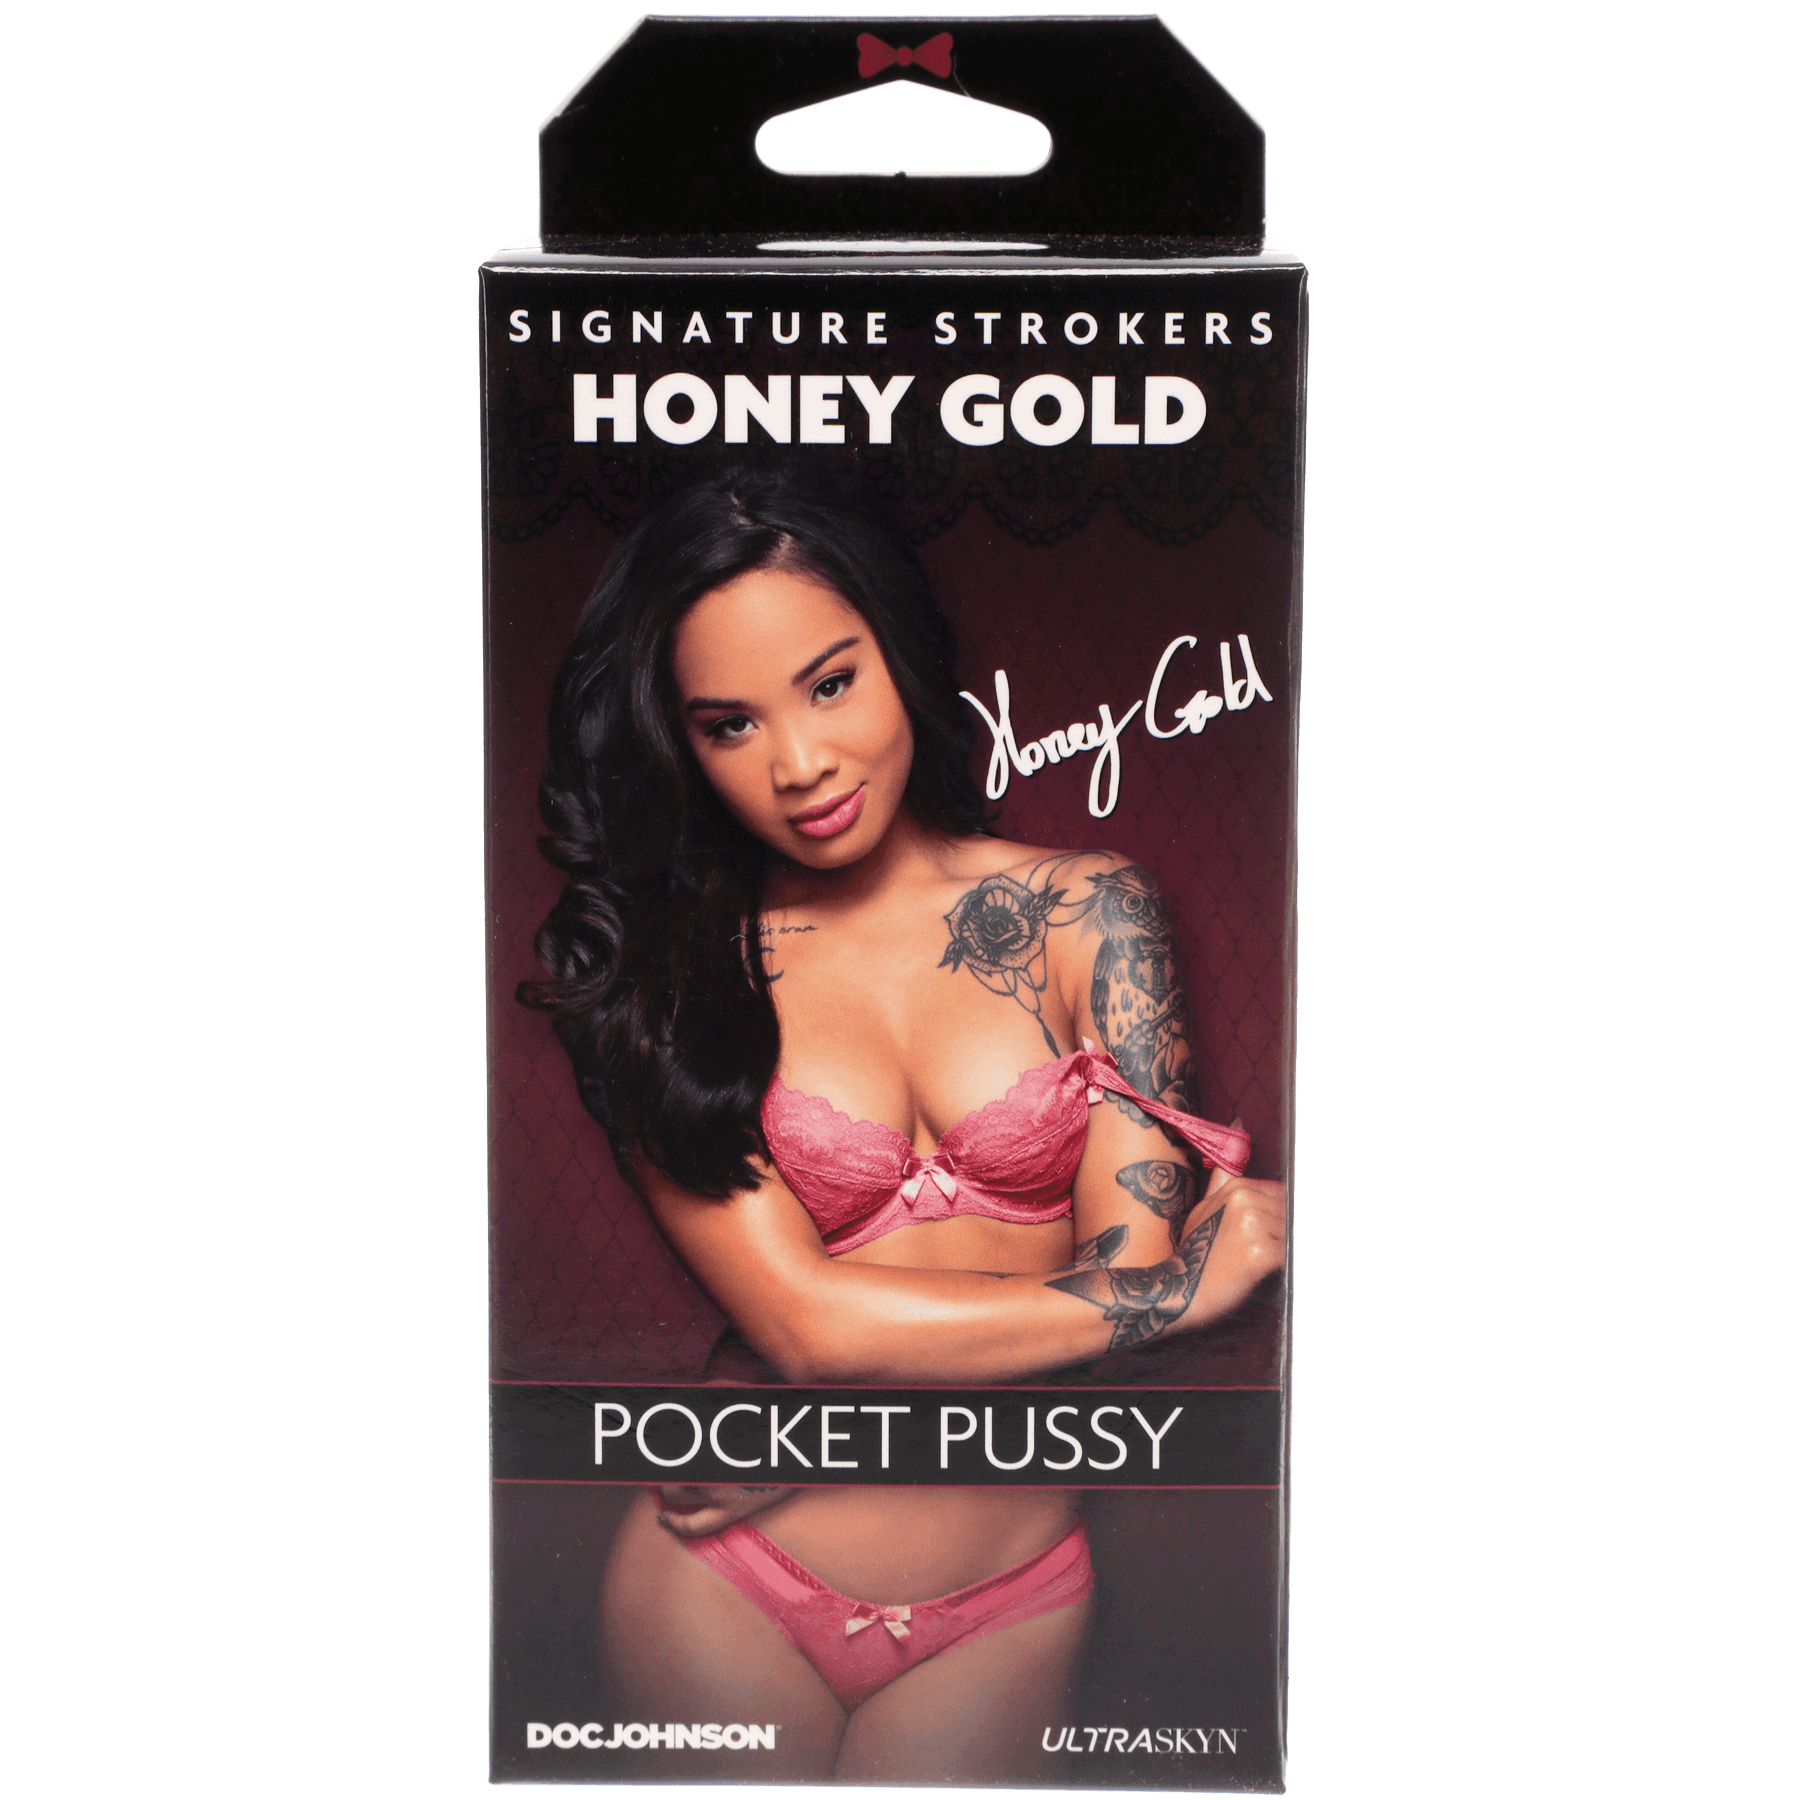 Doc Johnson Honey Gold Pocket Pussy - Buy At Luxury Toy X - Free 3-Day Shipping